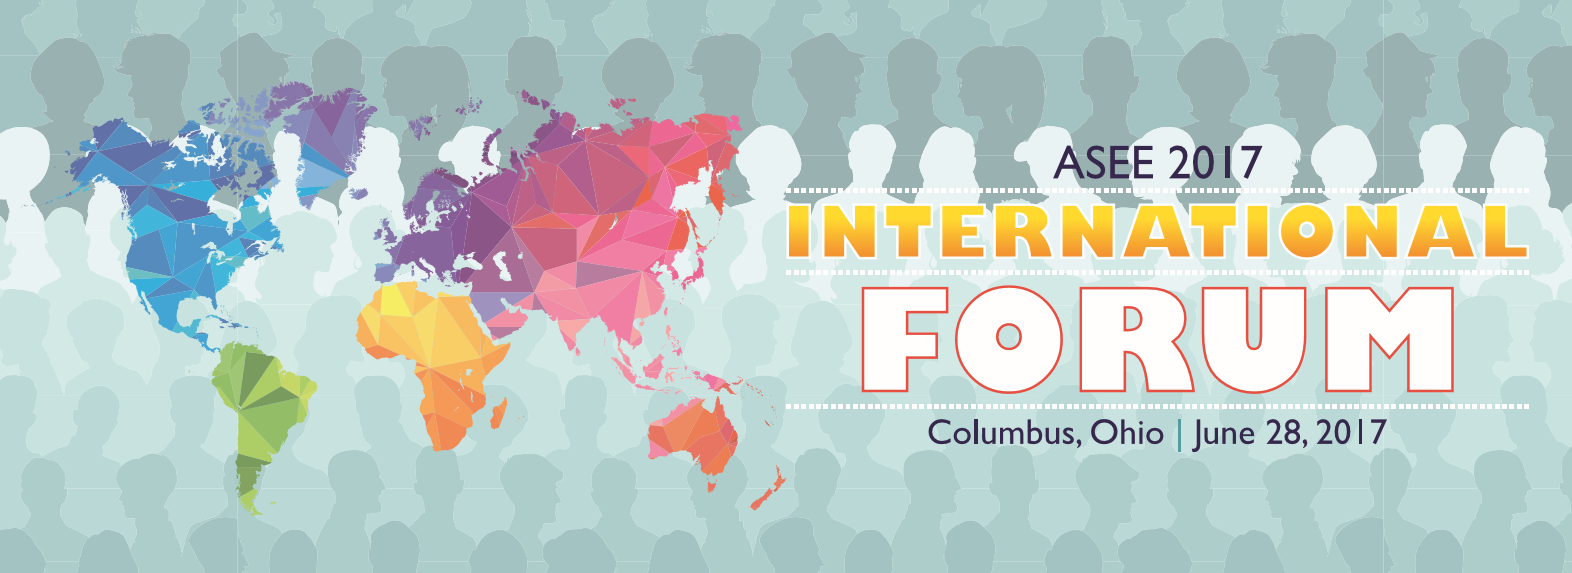 international forum